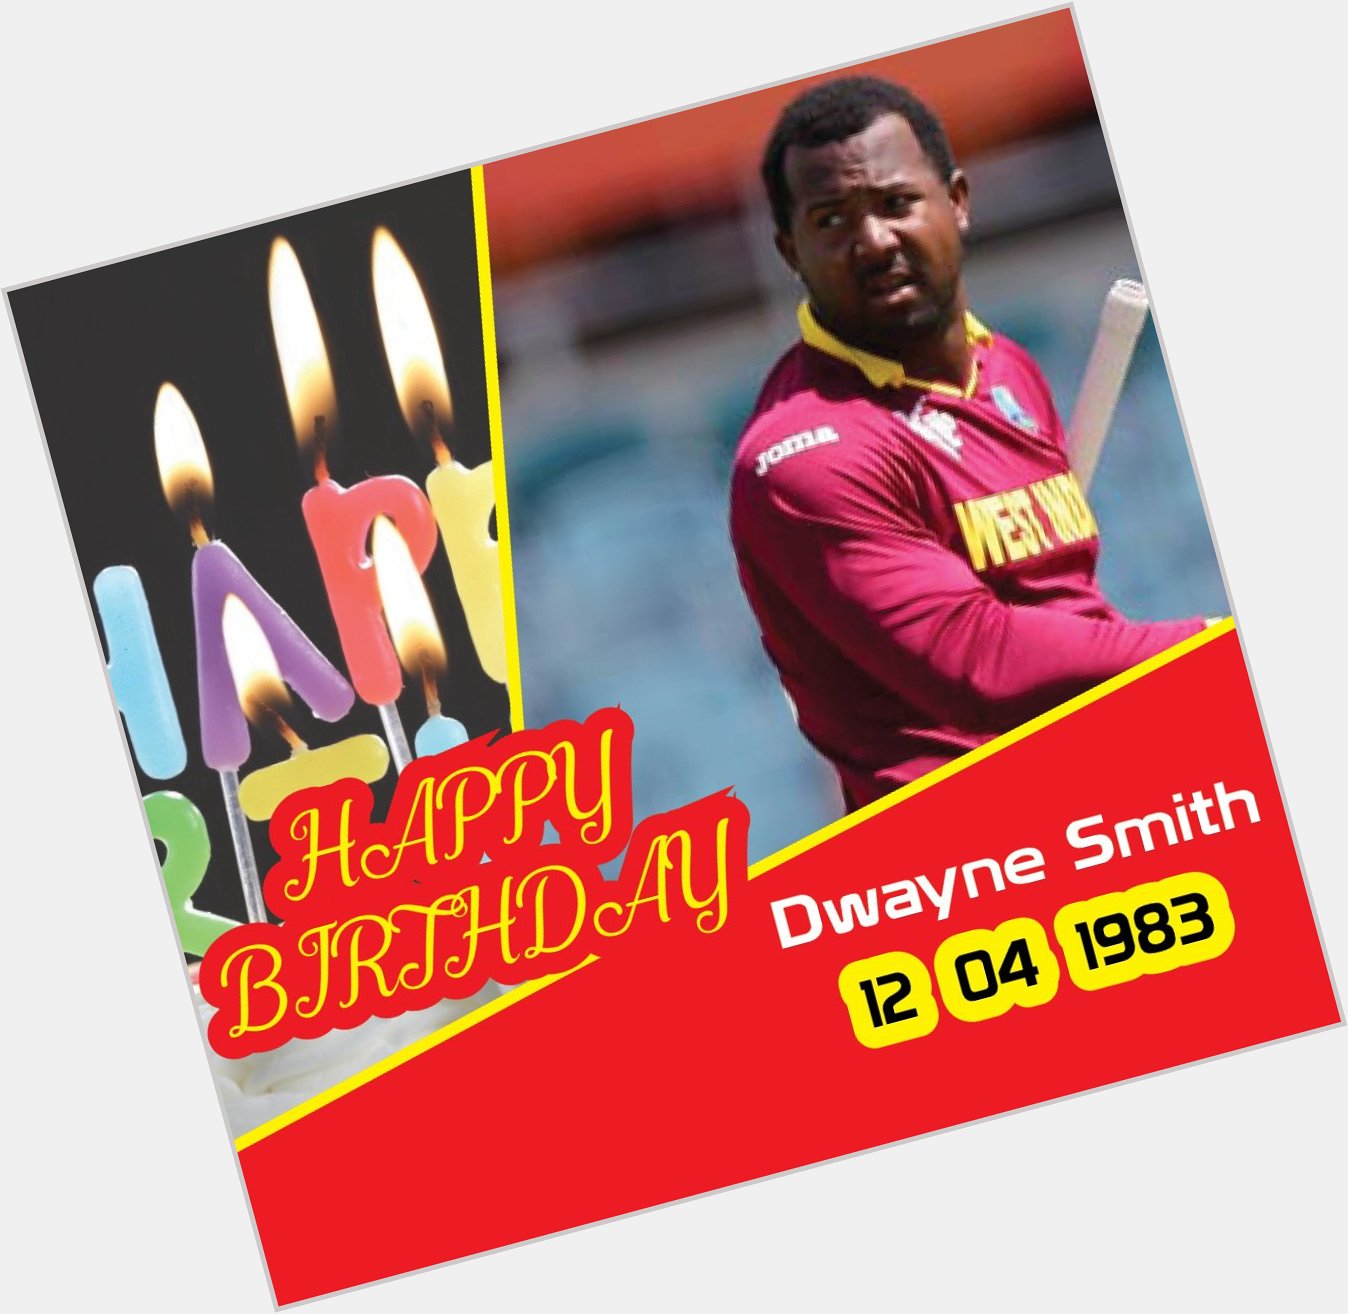  Happy Birthday Dwayne Smith 